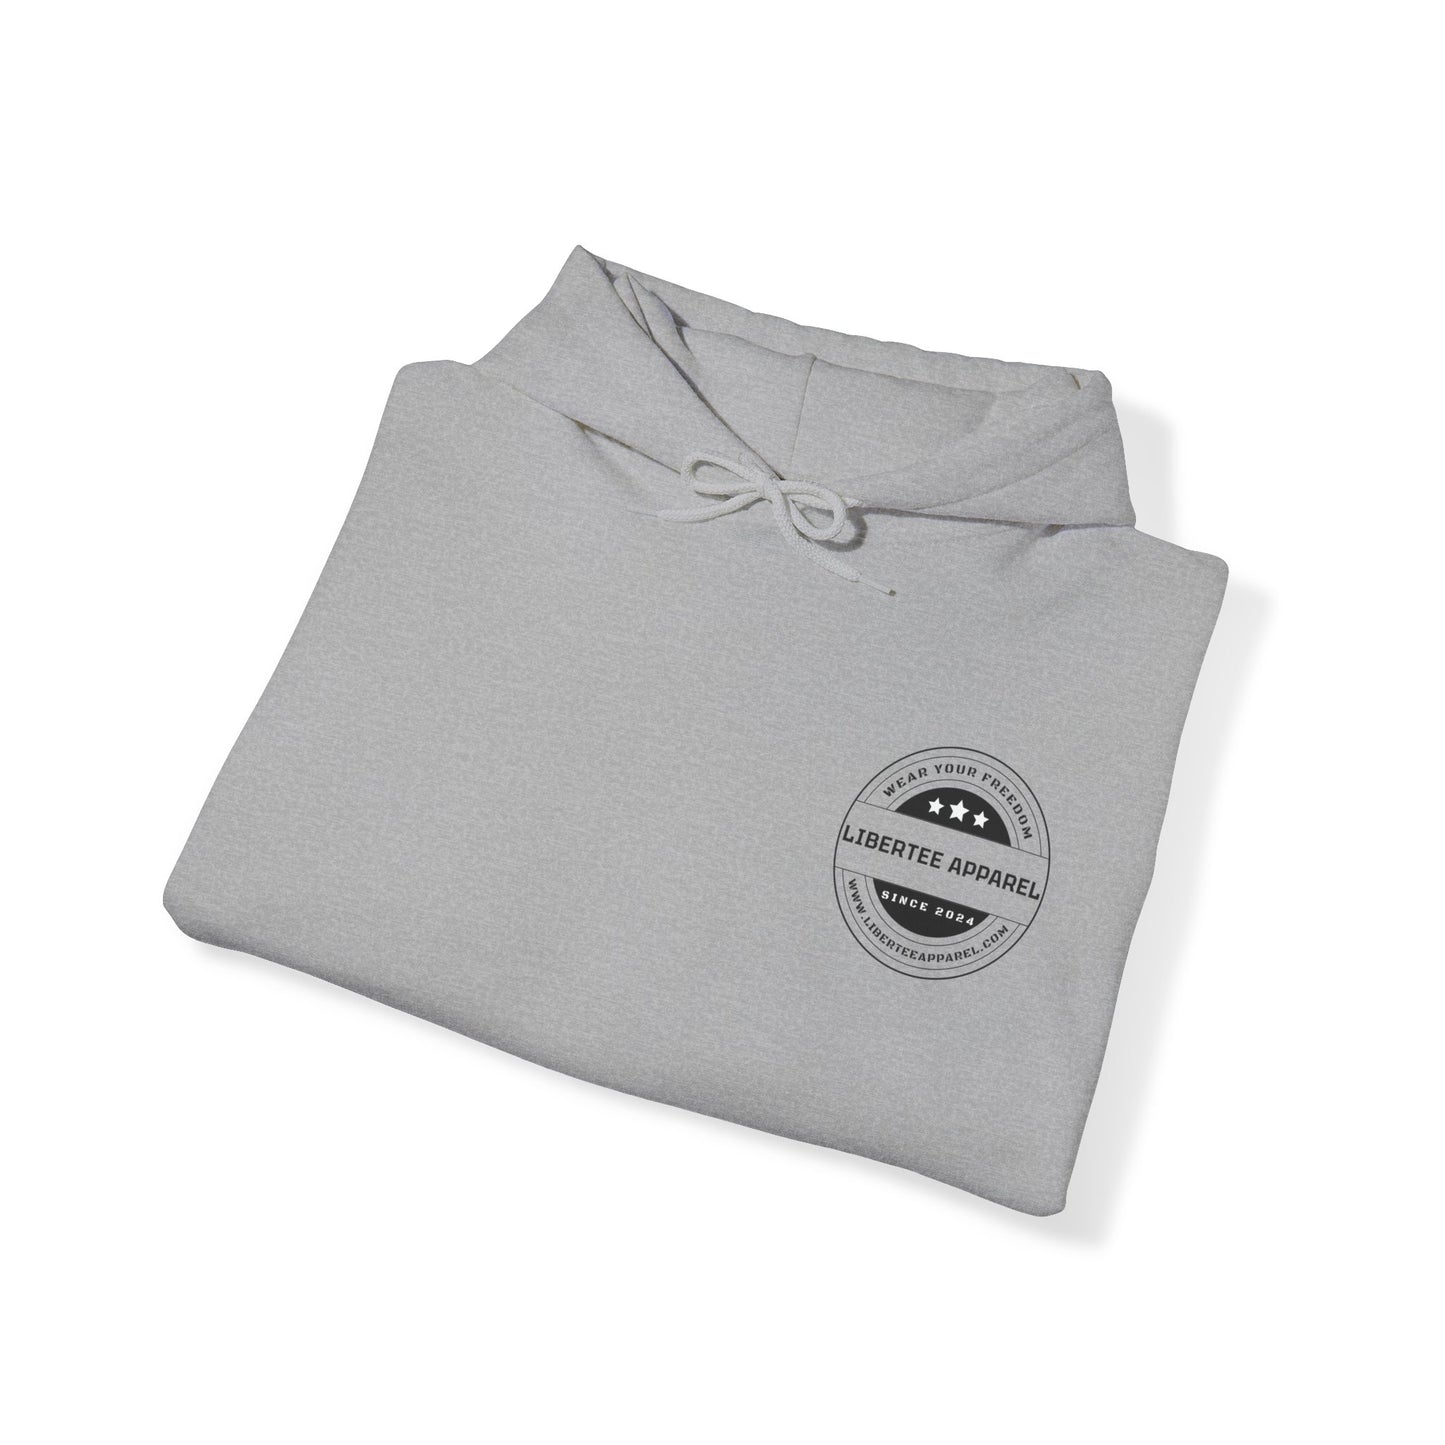 Gangster Sh*t "Black" Unisex Heavy Blend™ Hooded Sweatshirt